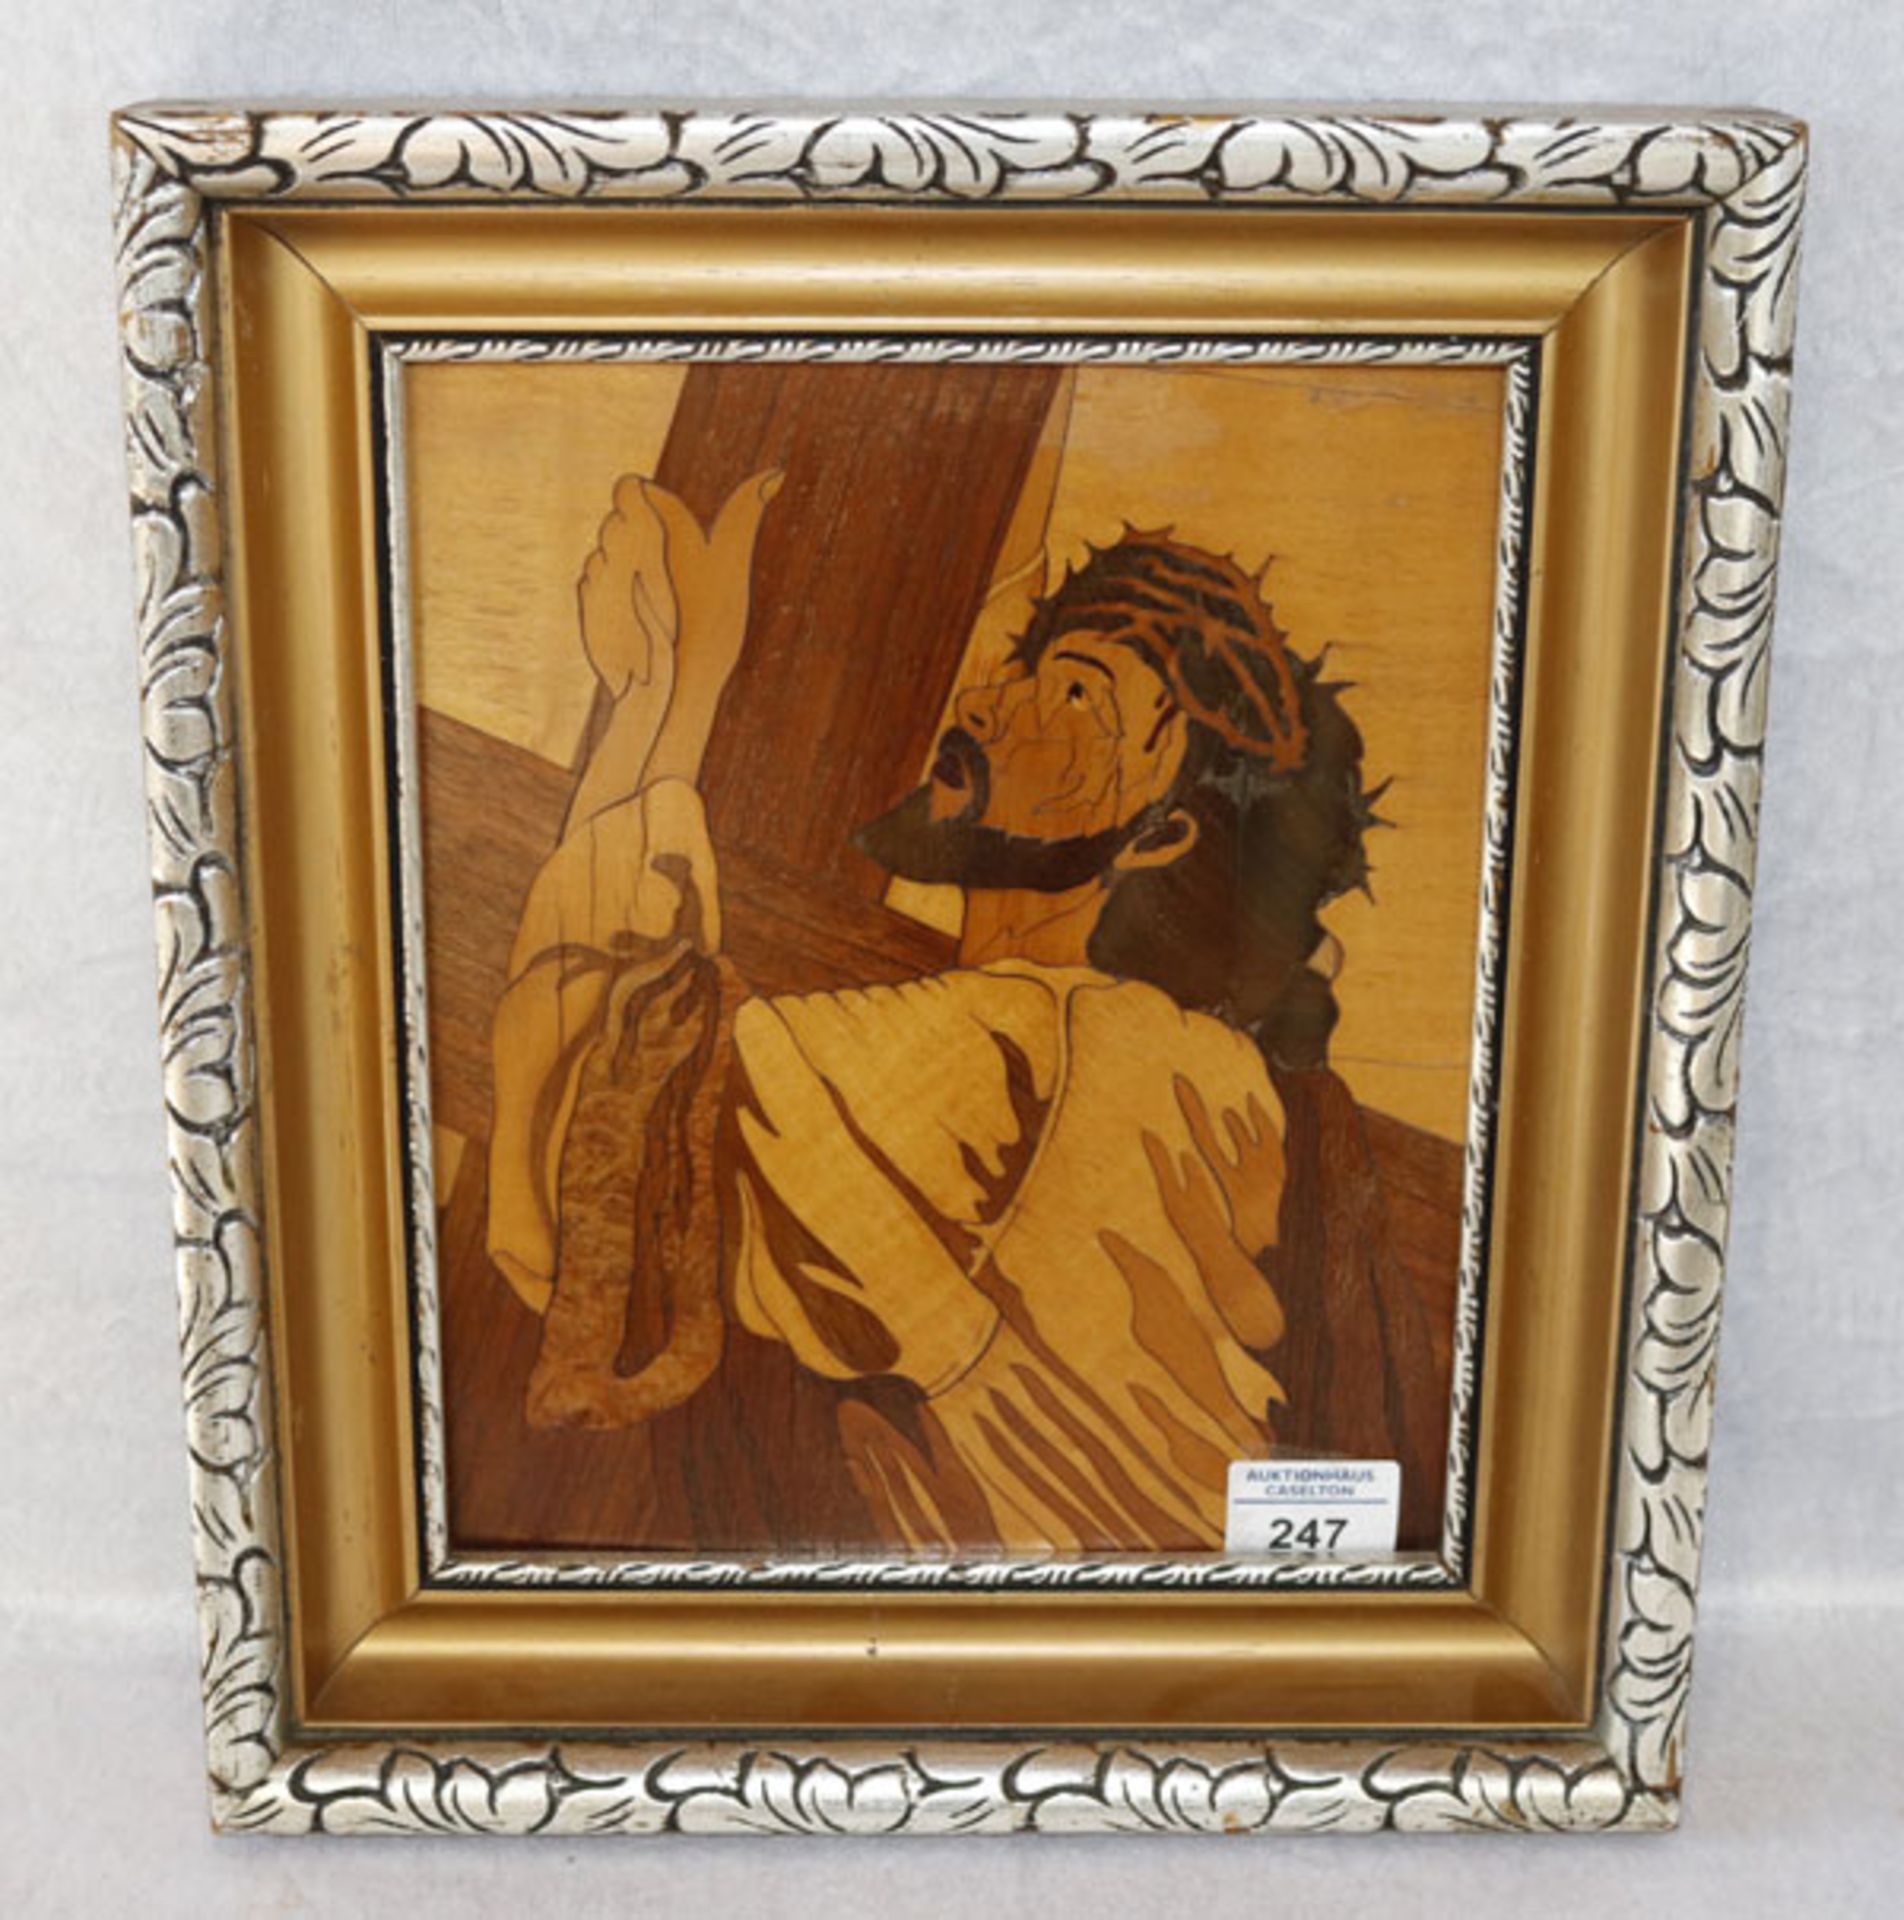 Holz Intarsienbild 'Christus', gerahmt, Rahmen beschädigt, incl. Rahmen 37 cm x 32 cm